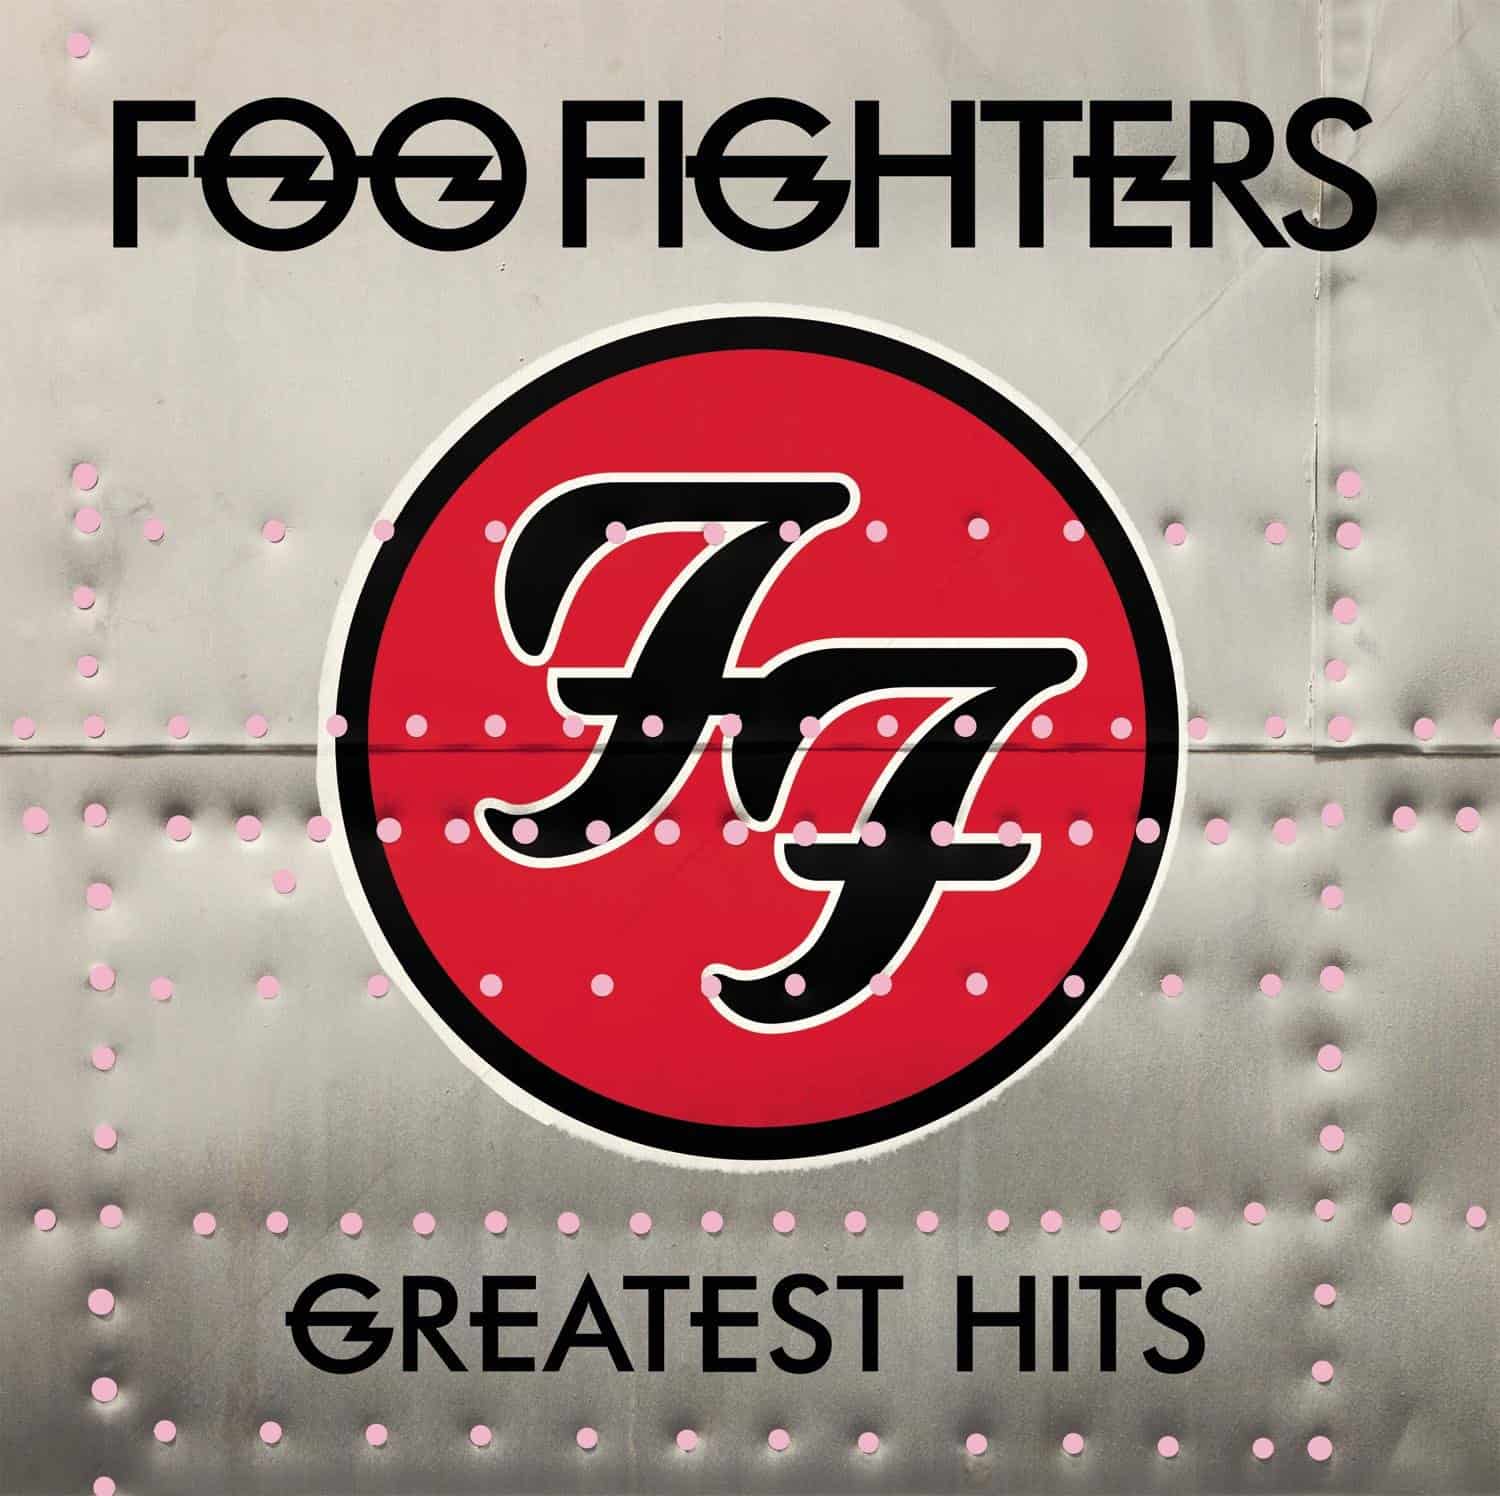 Foo-Fighters-Greatest-Hits-vinyl-record-album1